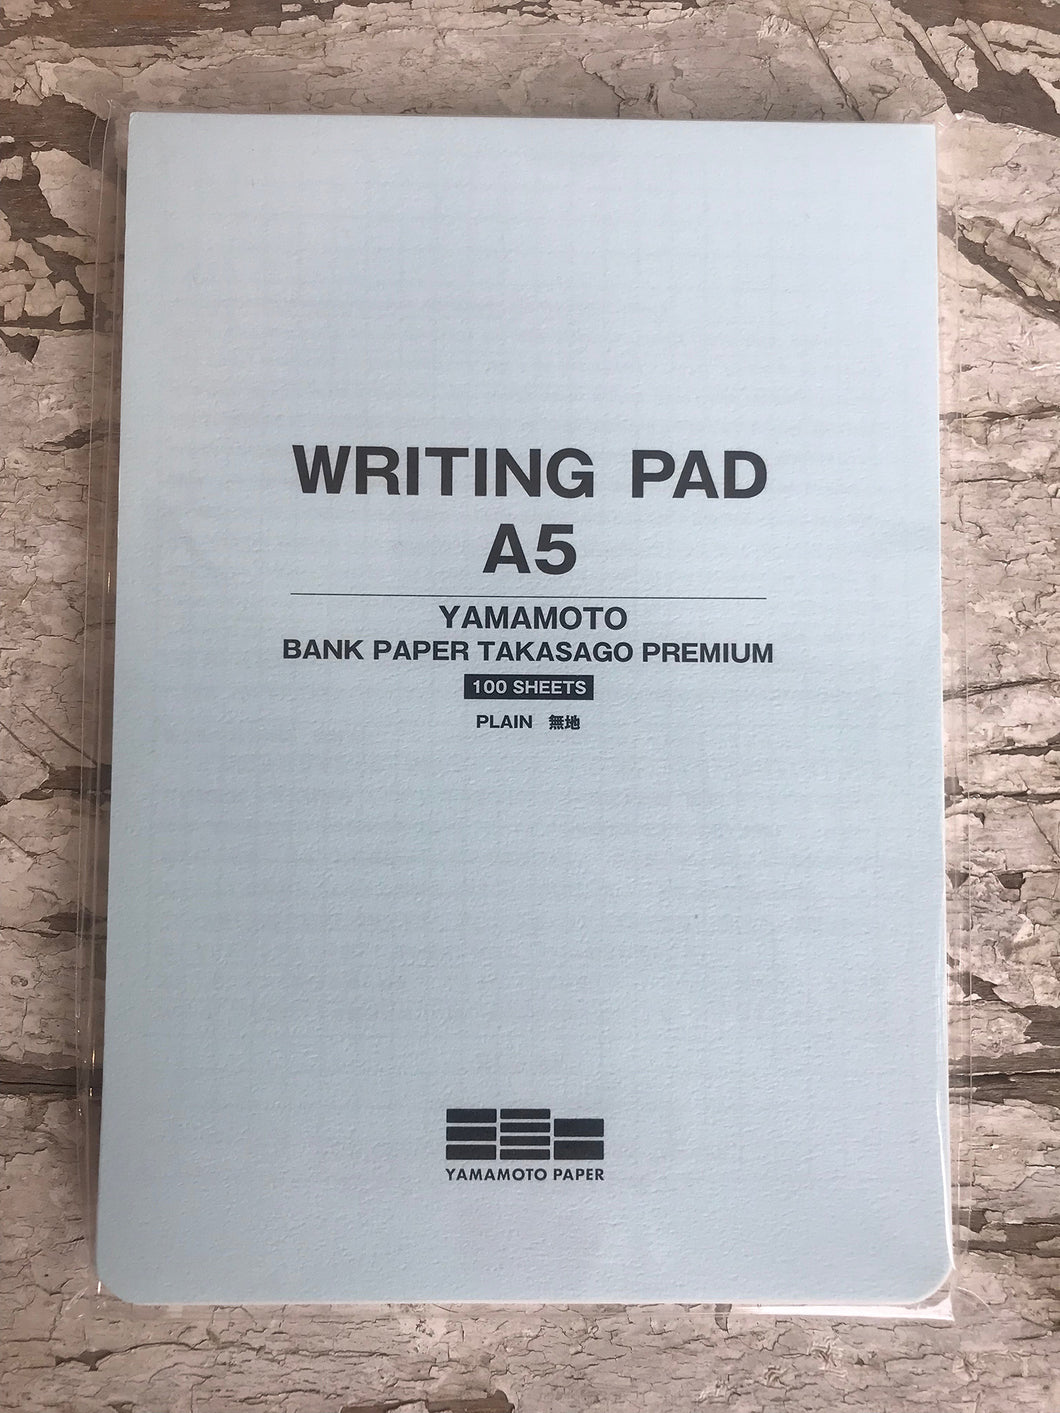 Bank Paper Takasago Premium Writing Pad A5